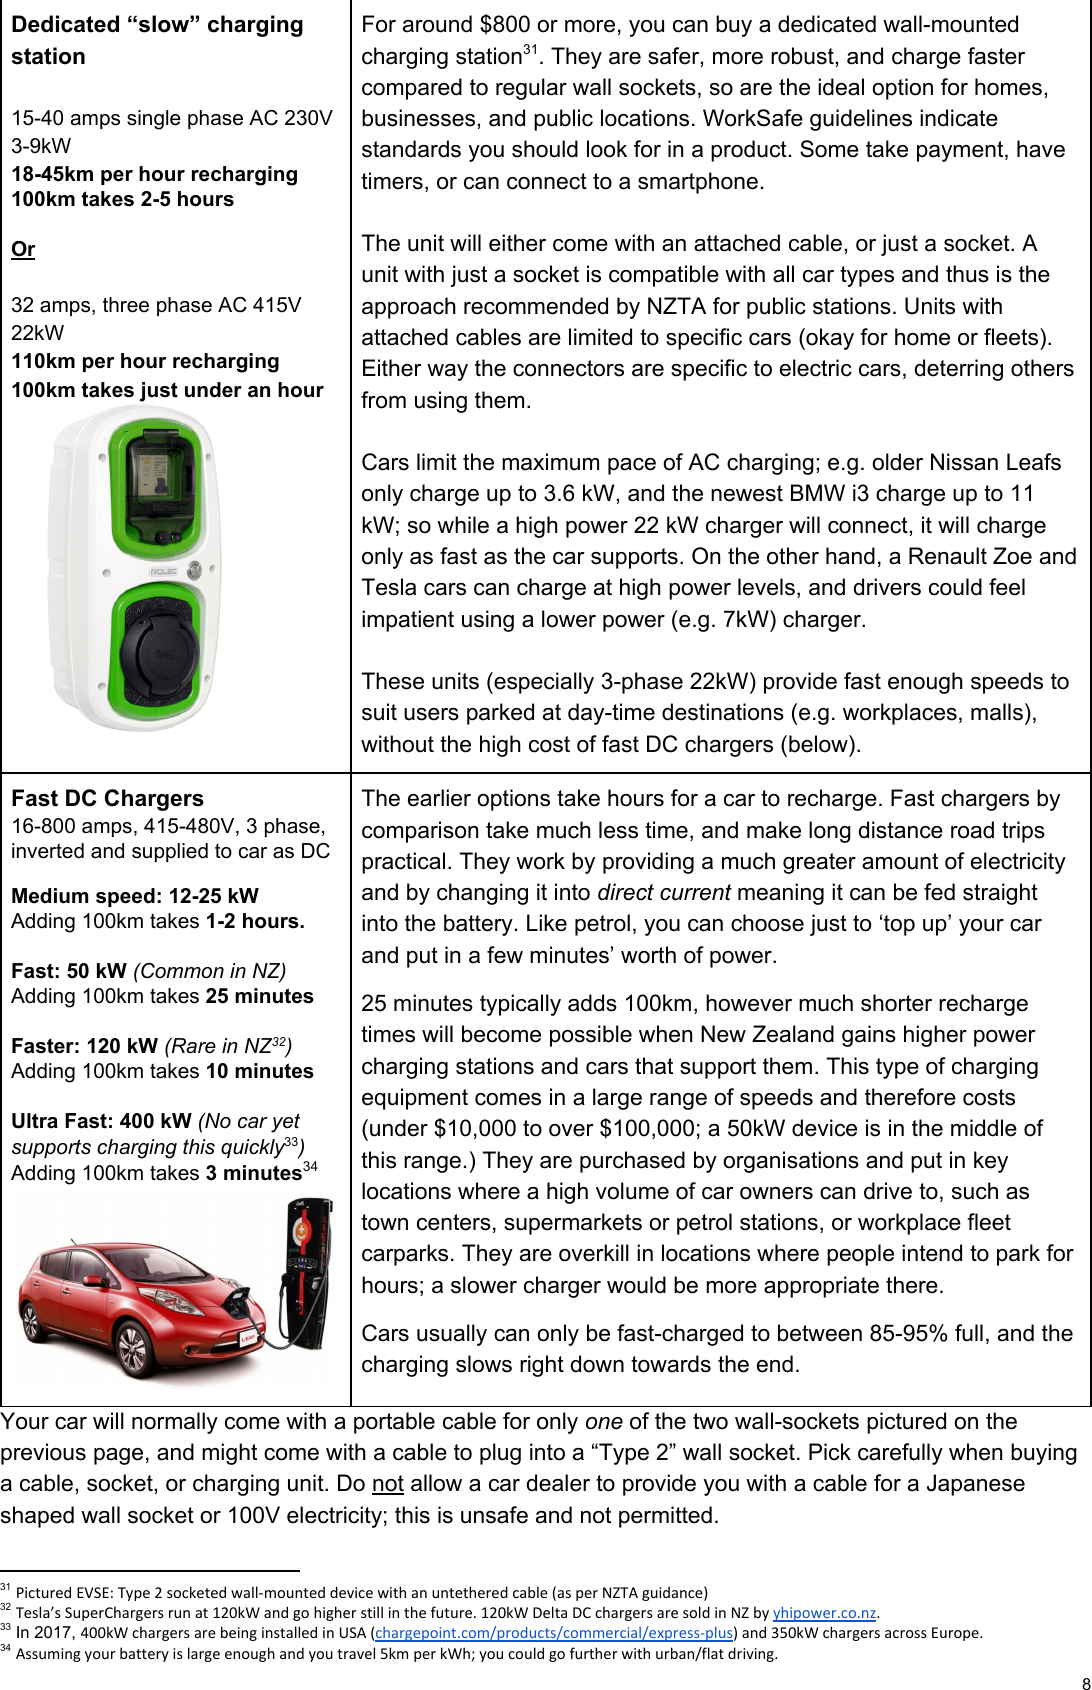 NZ Electric Car Guide 13Jan2018